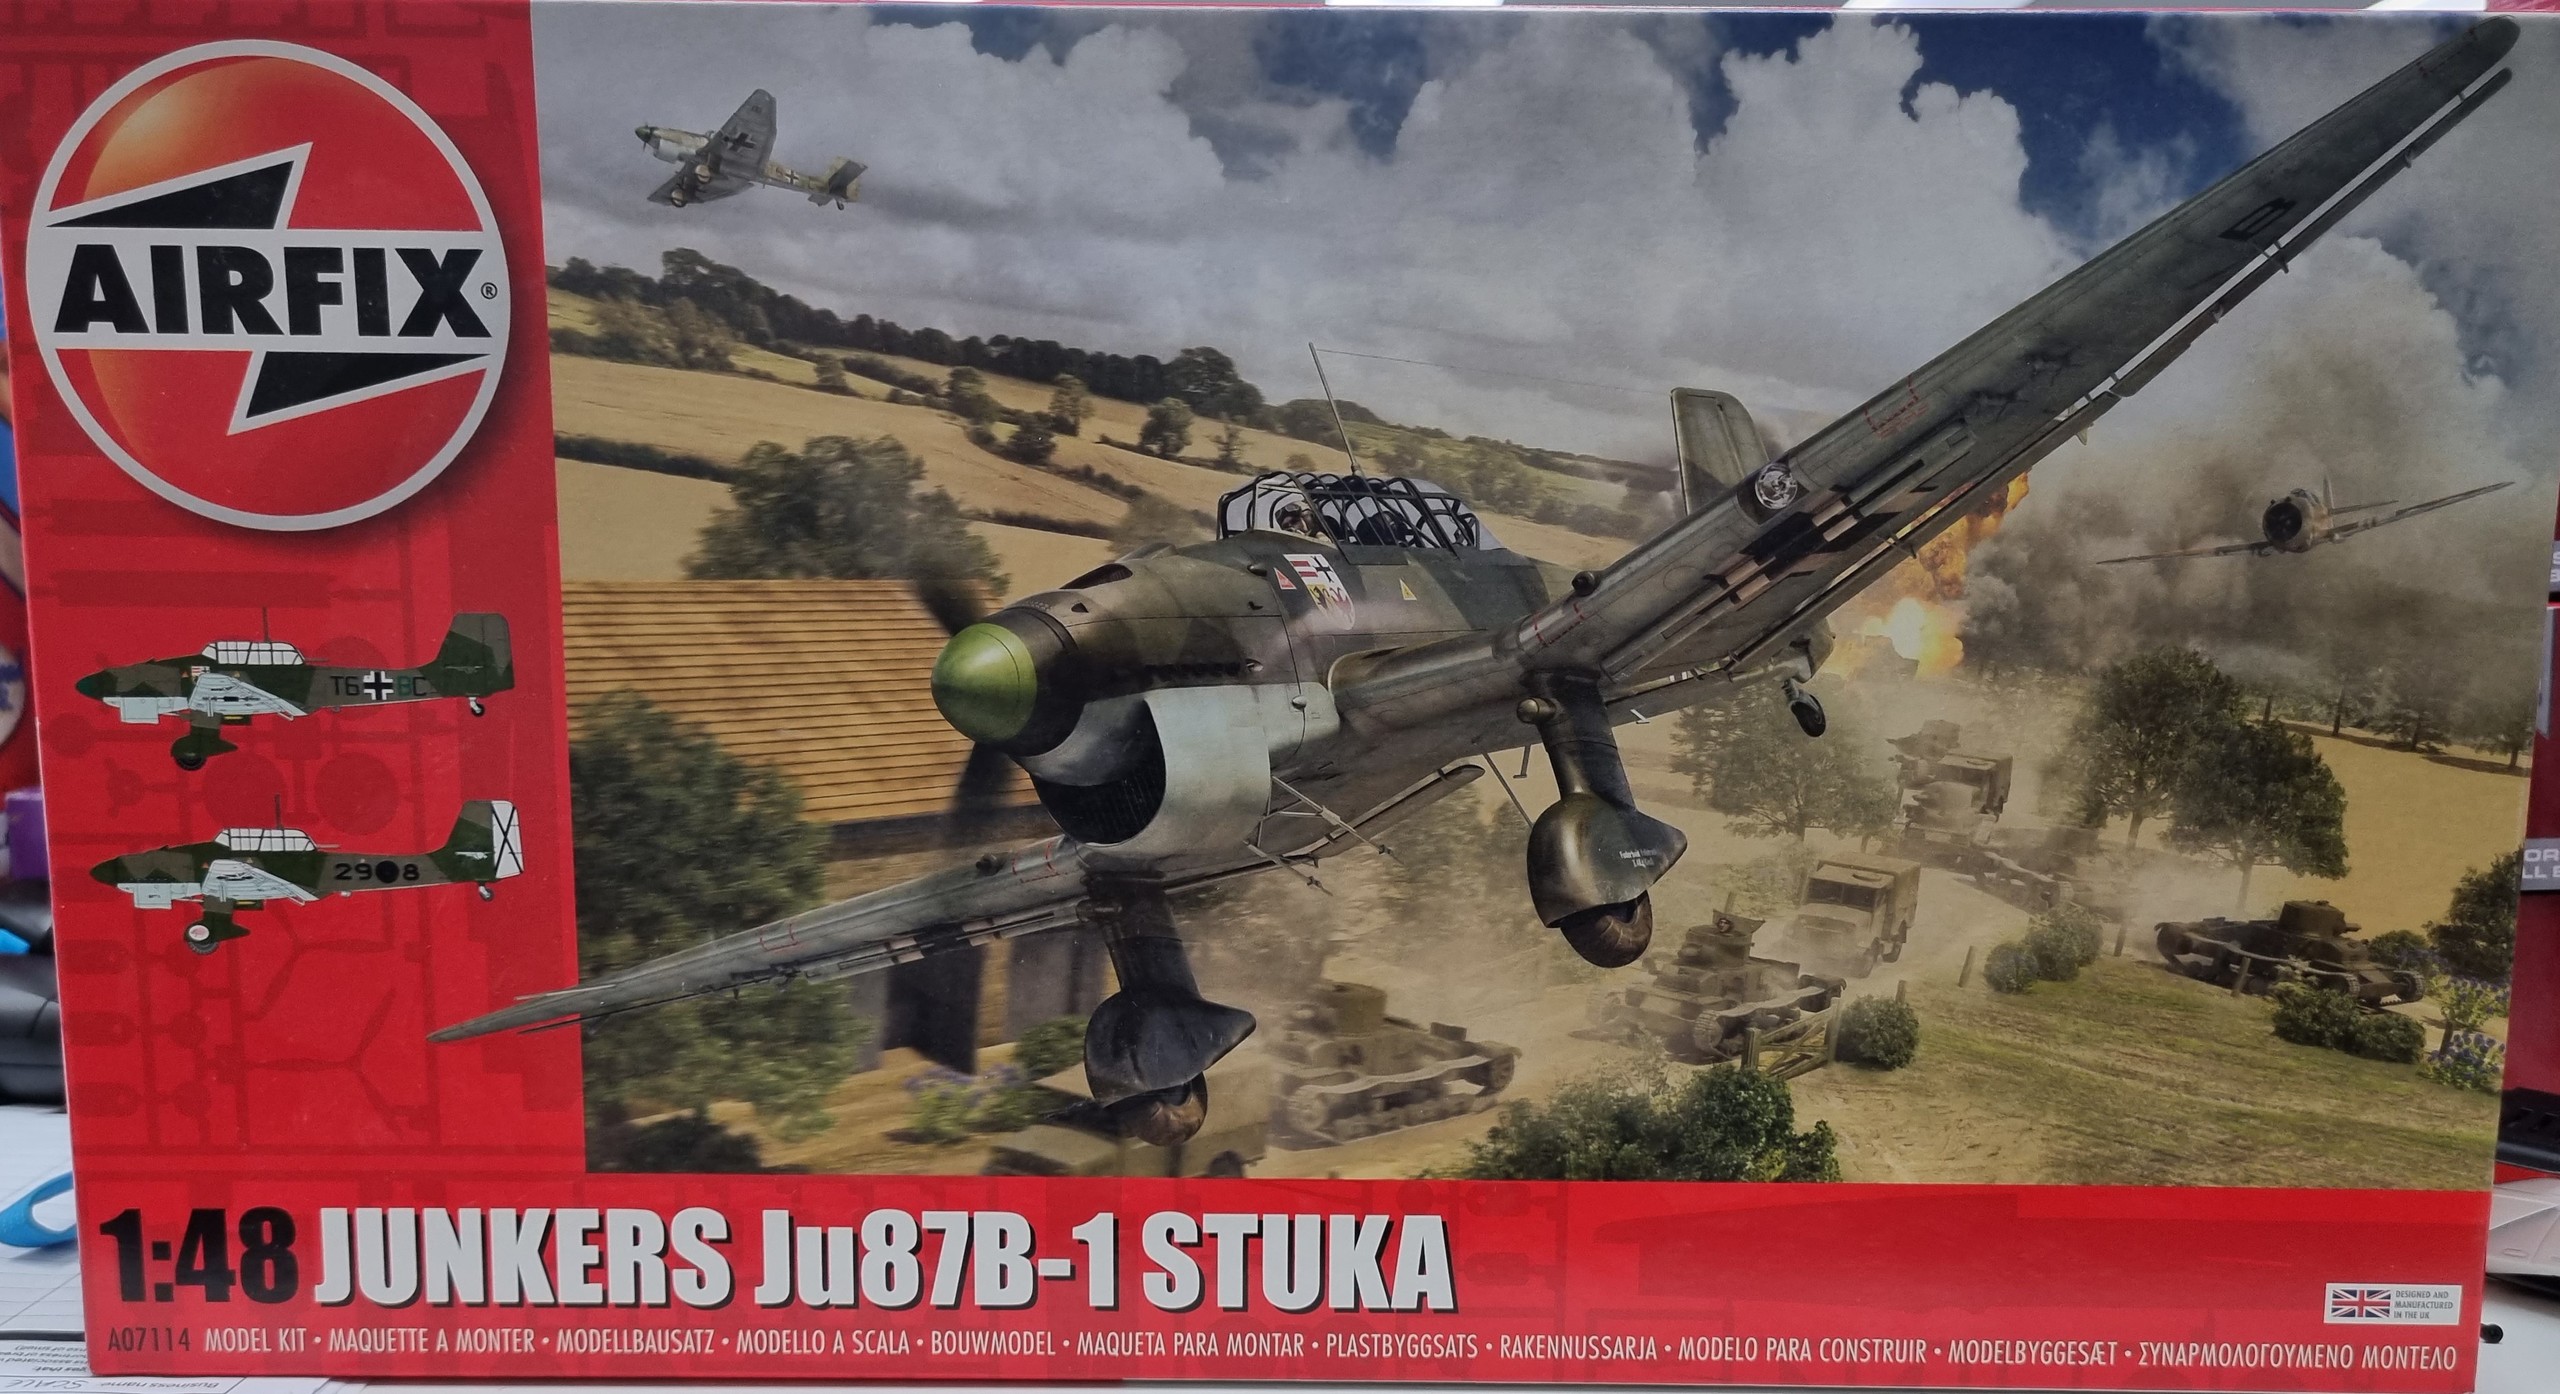 Junkers Ju87B-1 Stuka Fighter Plane Kitset 1/48 Airfix